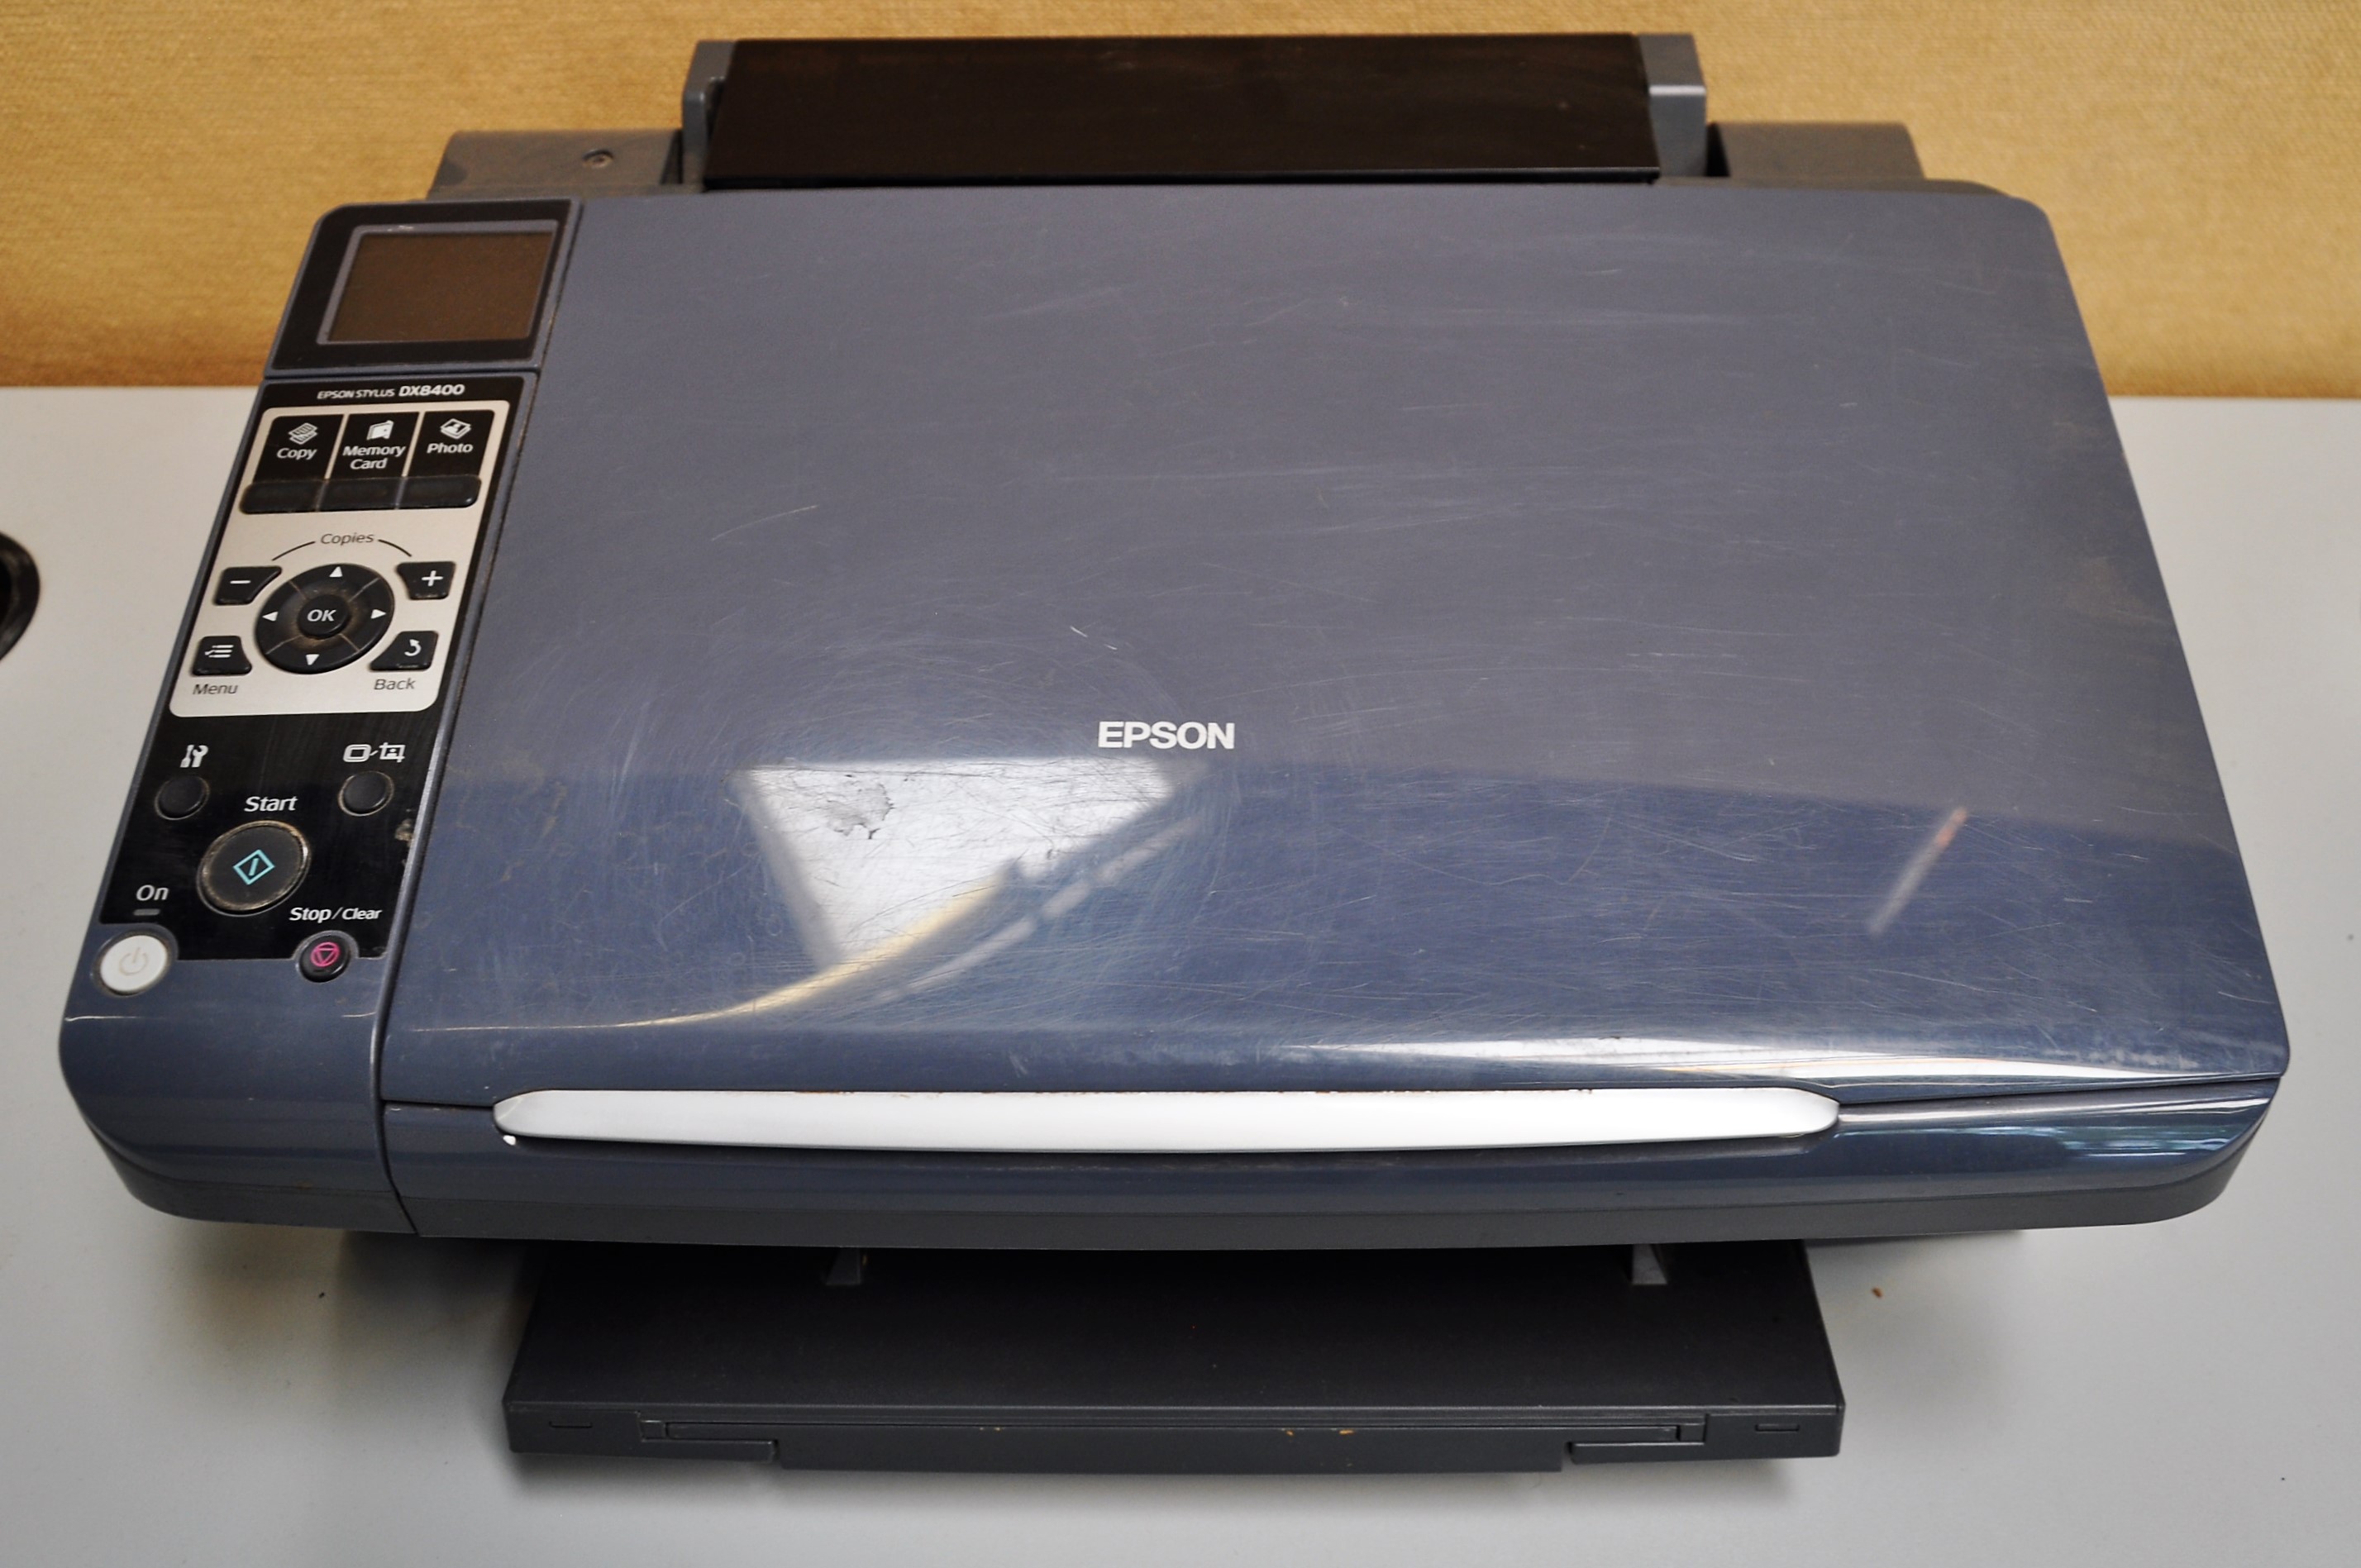 Epson Stylus Dx8400 Copierprinter 4875